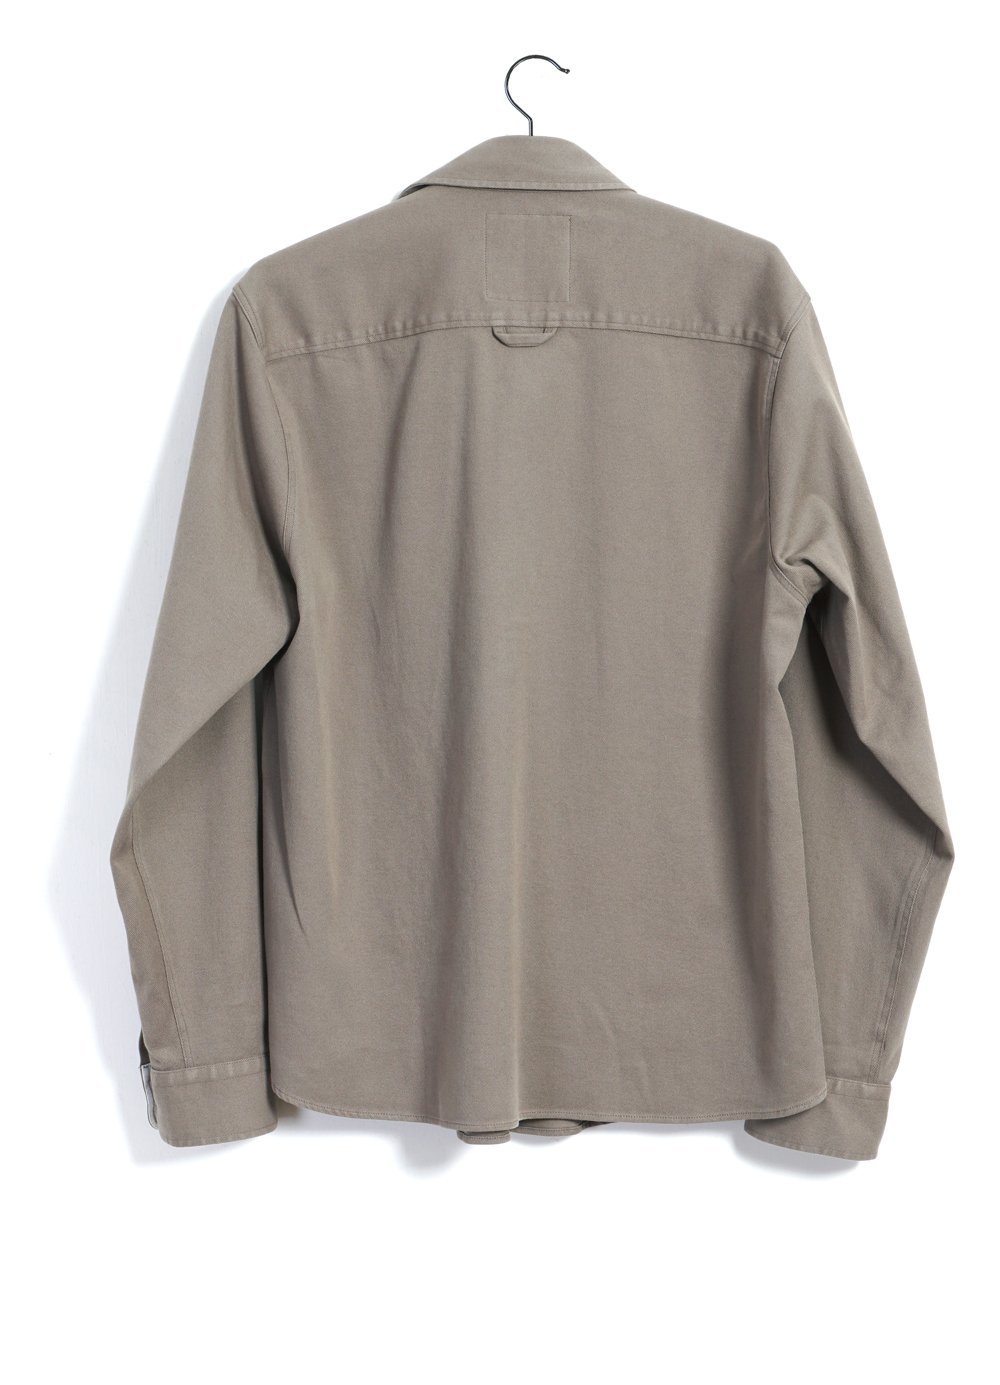 HANSEN Garments - ROBERT | Casual Pull-on Shirt | Light Grey - HANSEN Garments